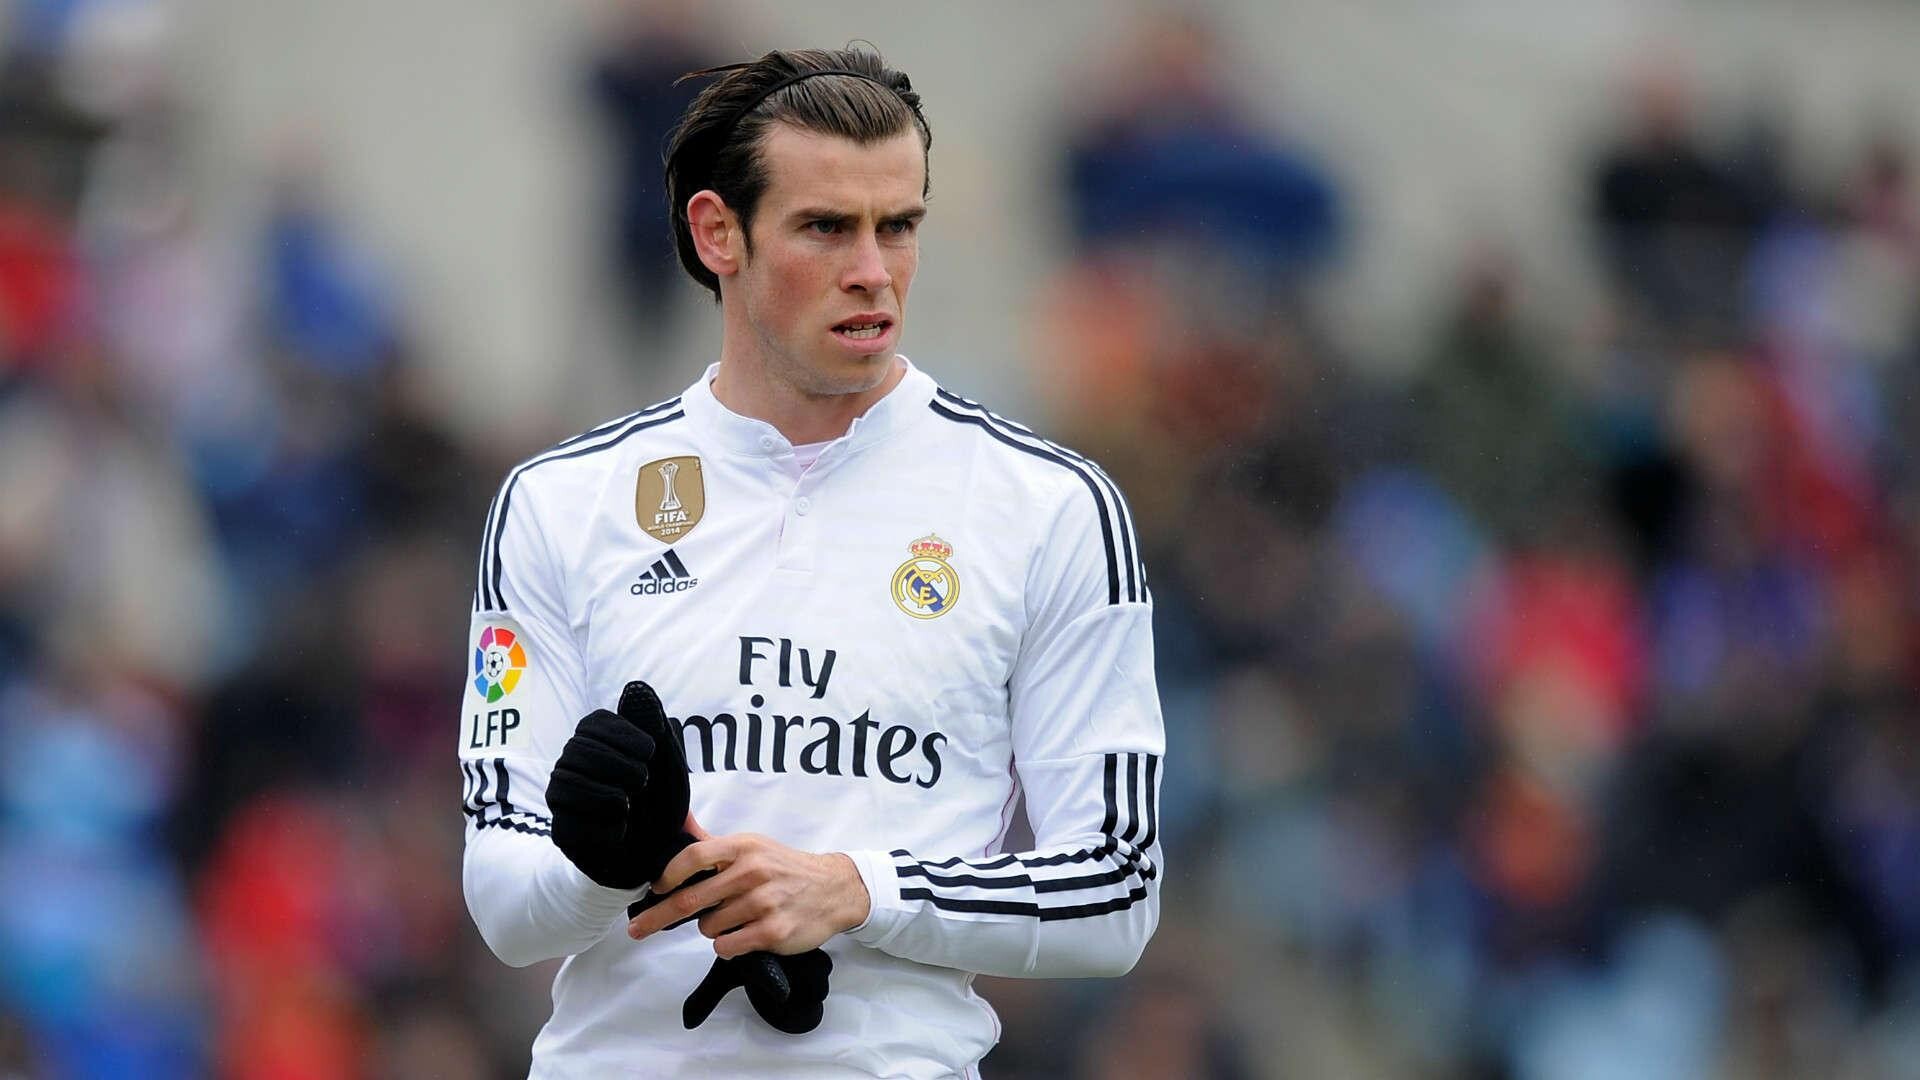 Gareth Bale: Real Madrid, La Liga, UEFA Champions League, Welsh Footballer of the Year. 1920x1080 Full HD Wallpaper.